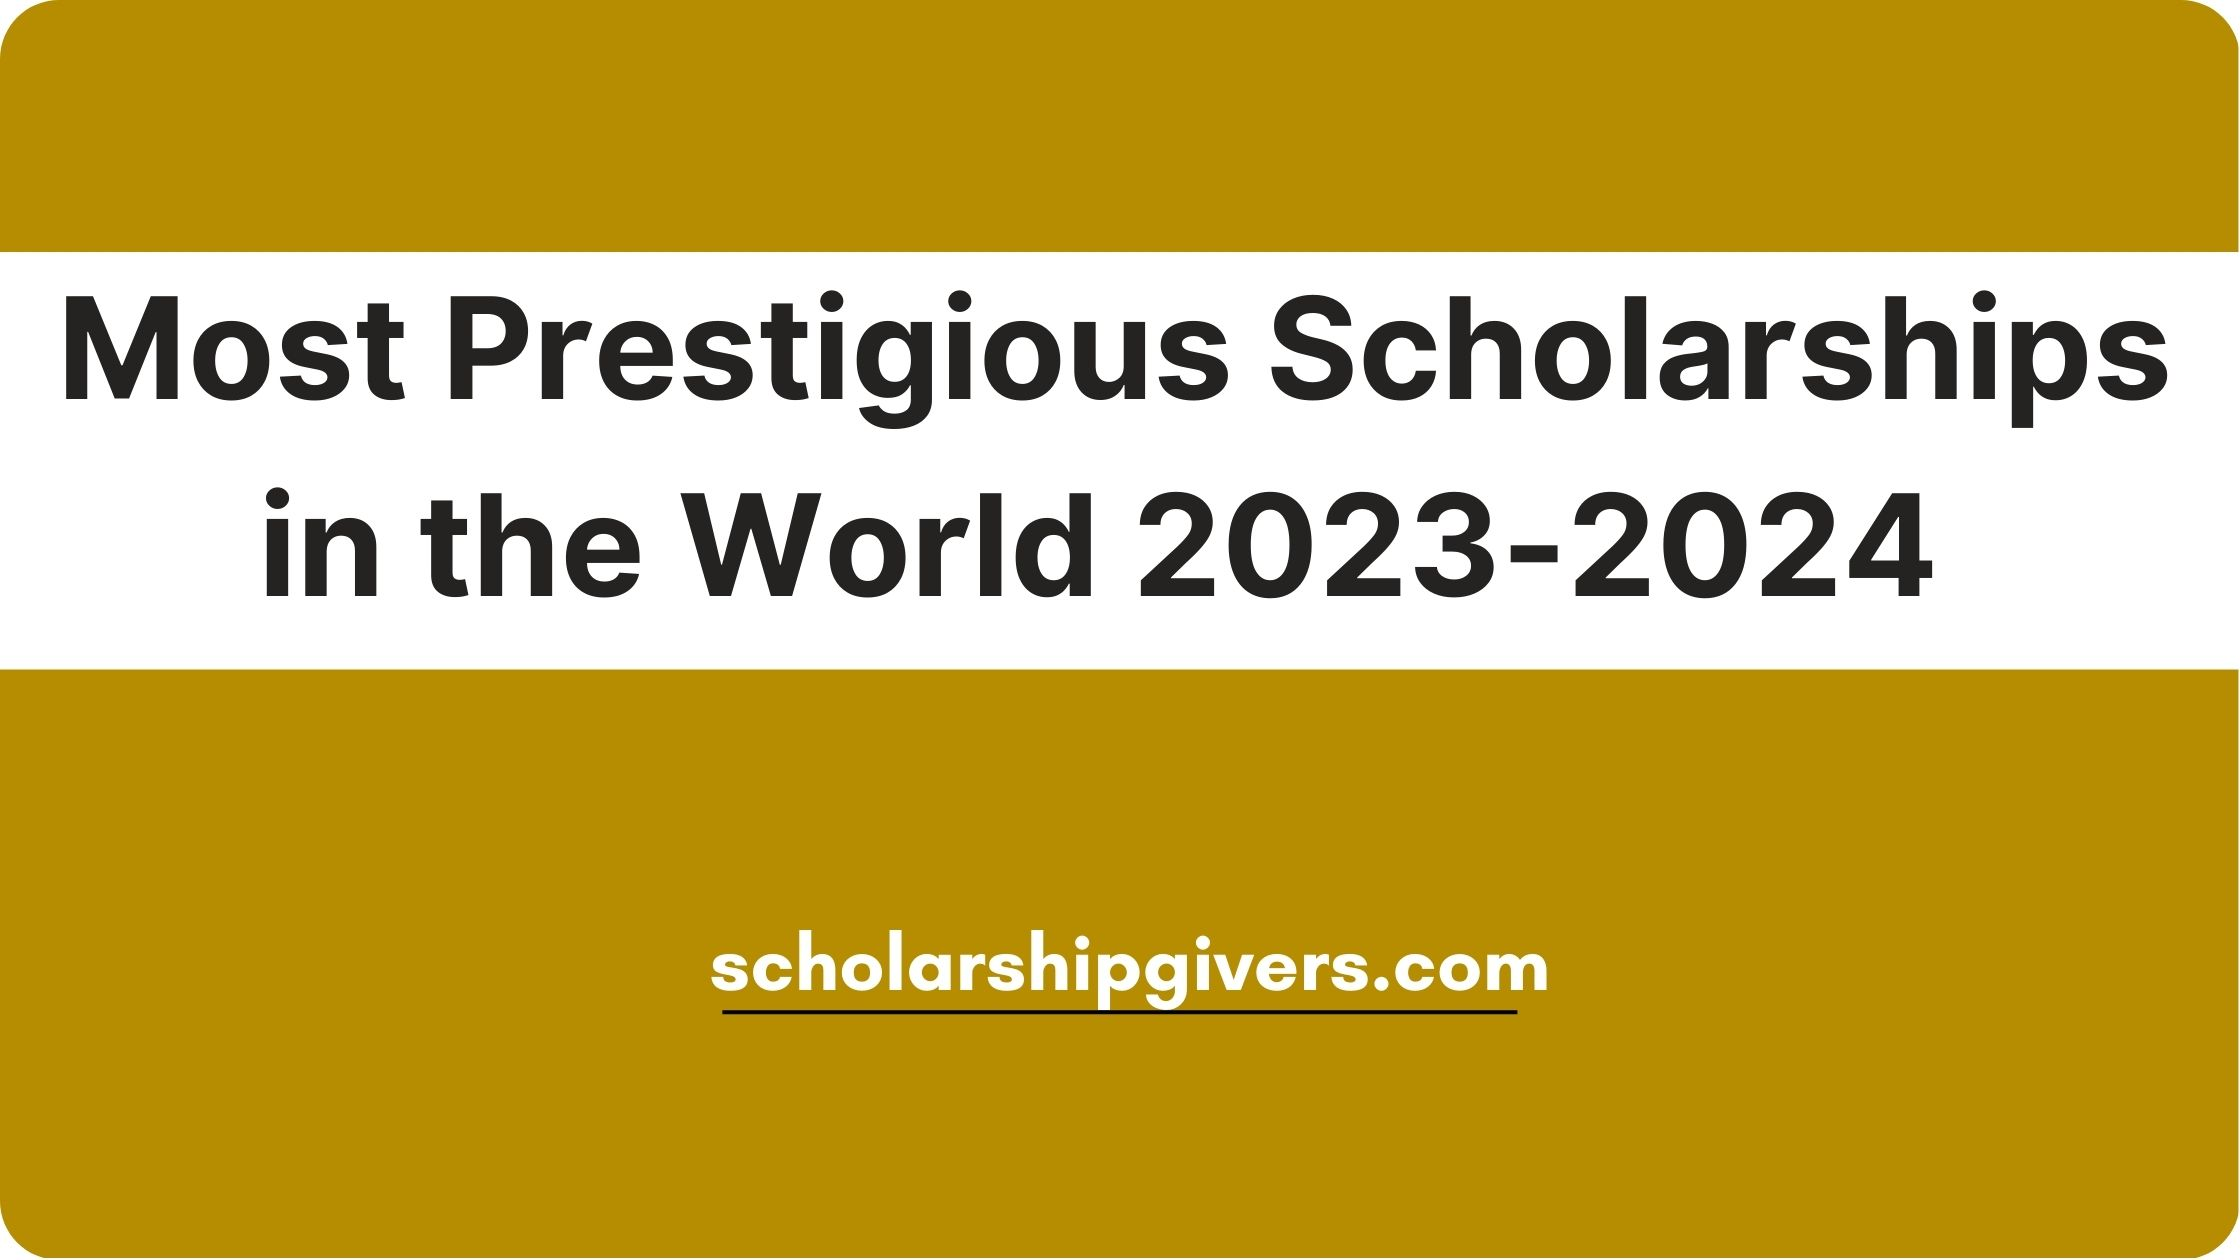 Most Prestigious Scholarships in the World 2023-2024